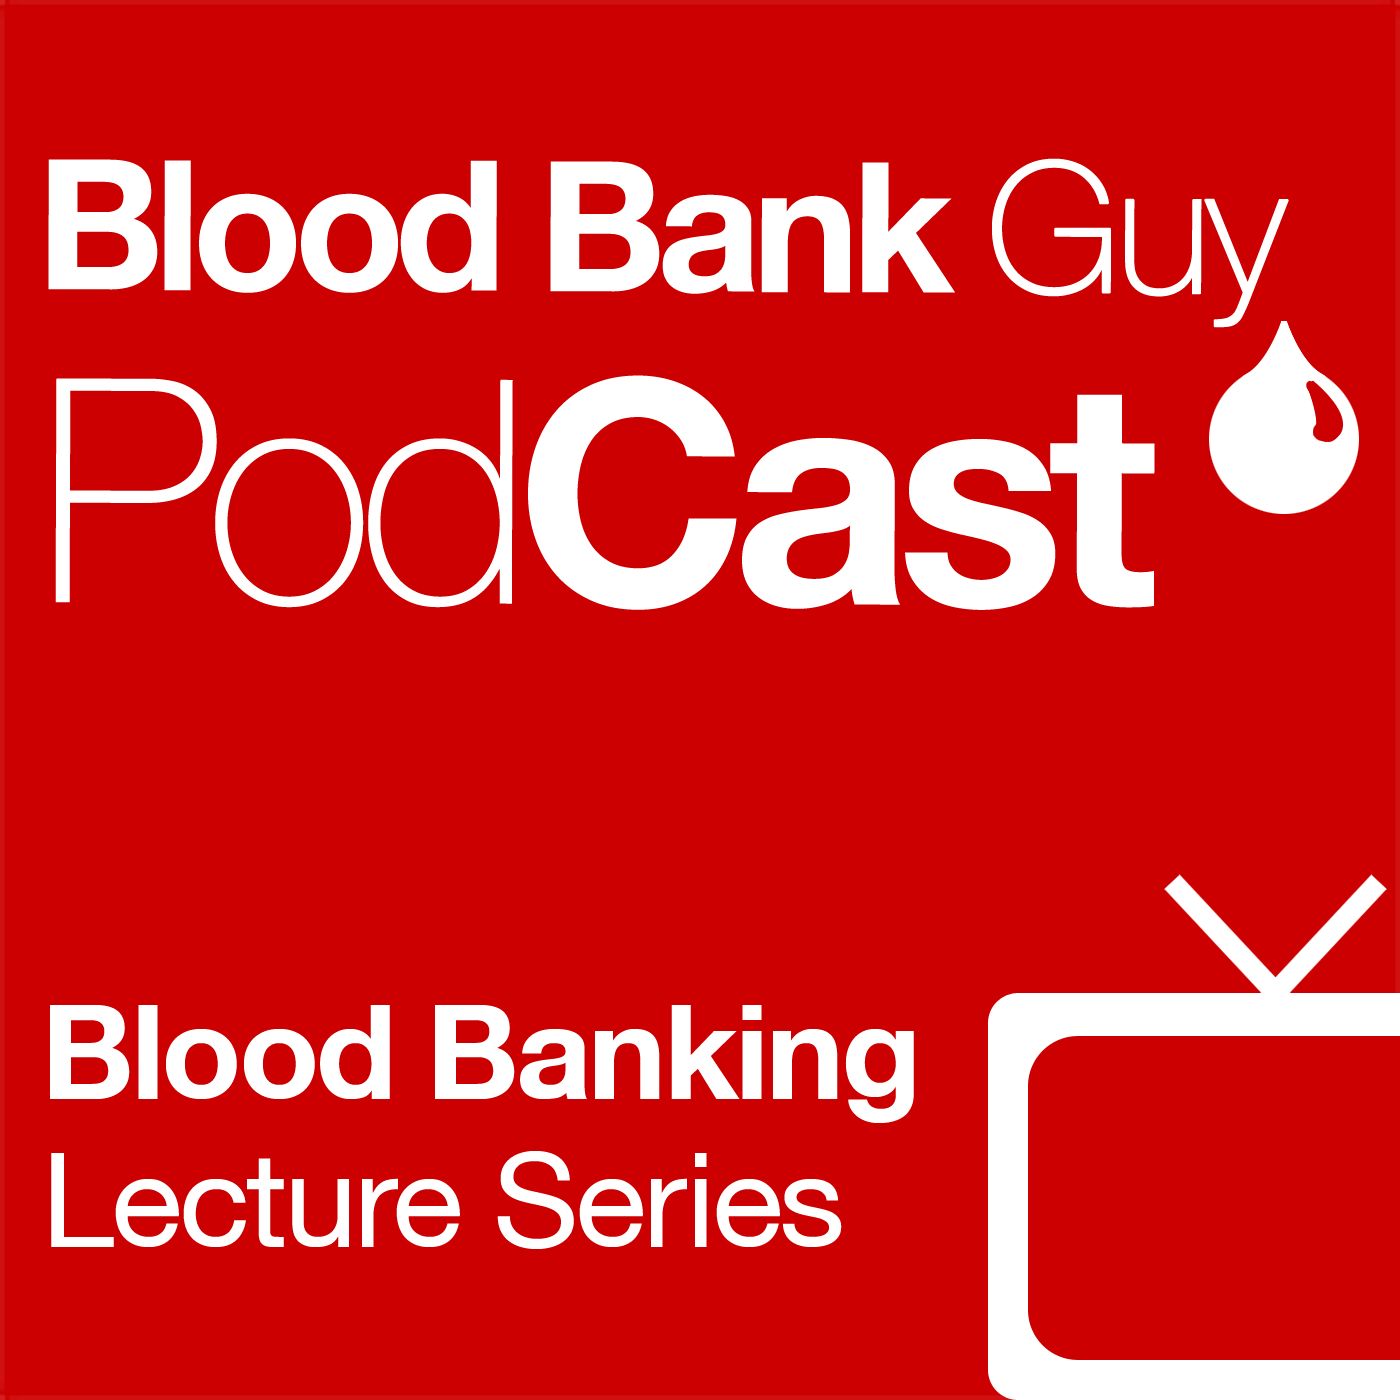 Blood Bank Guy Videos Podcast artwork